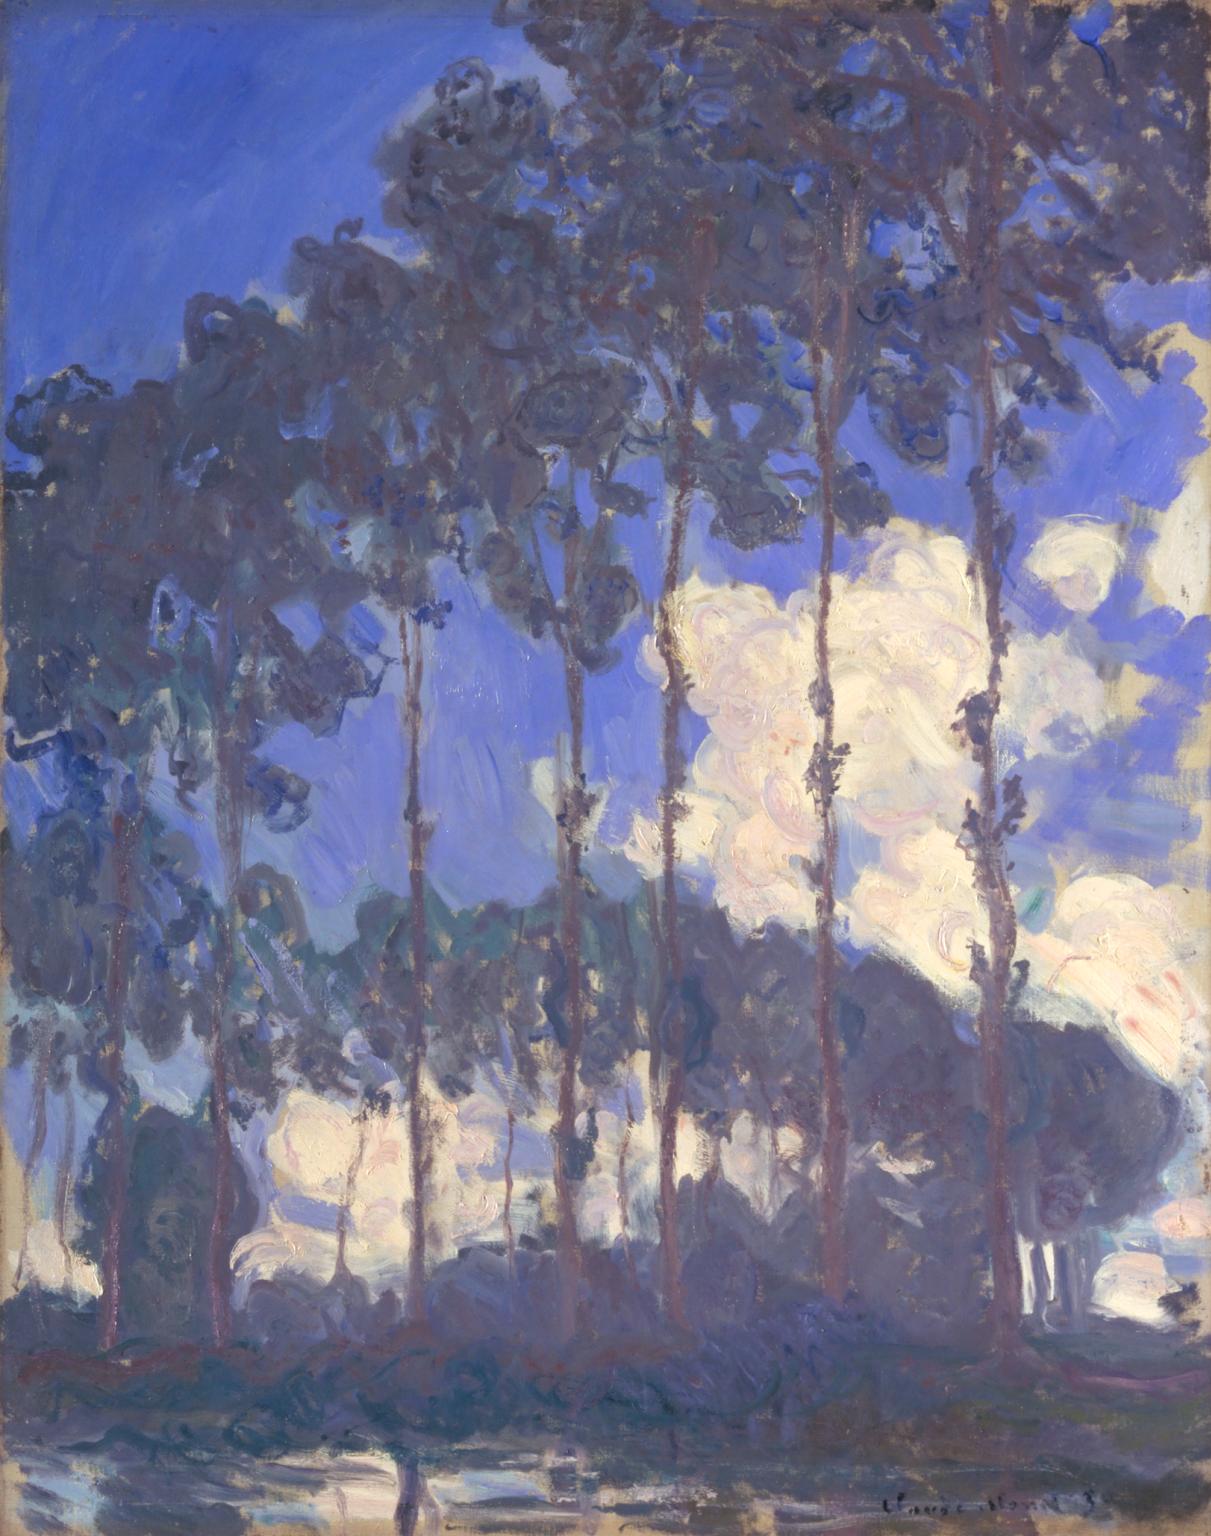 Claude+Monet-1840-1926 (586).jpg